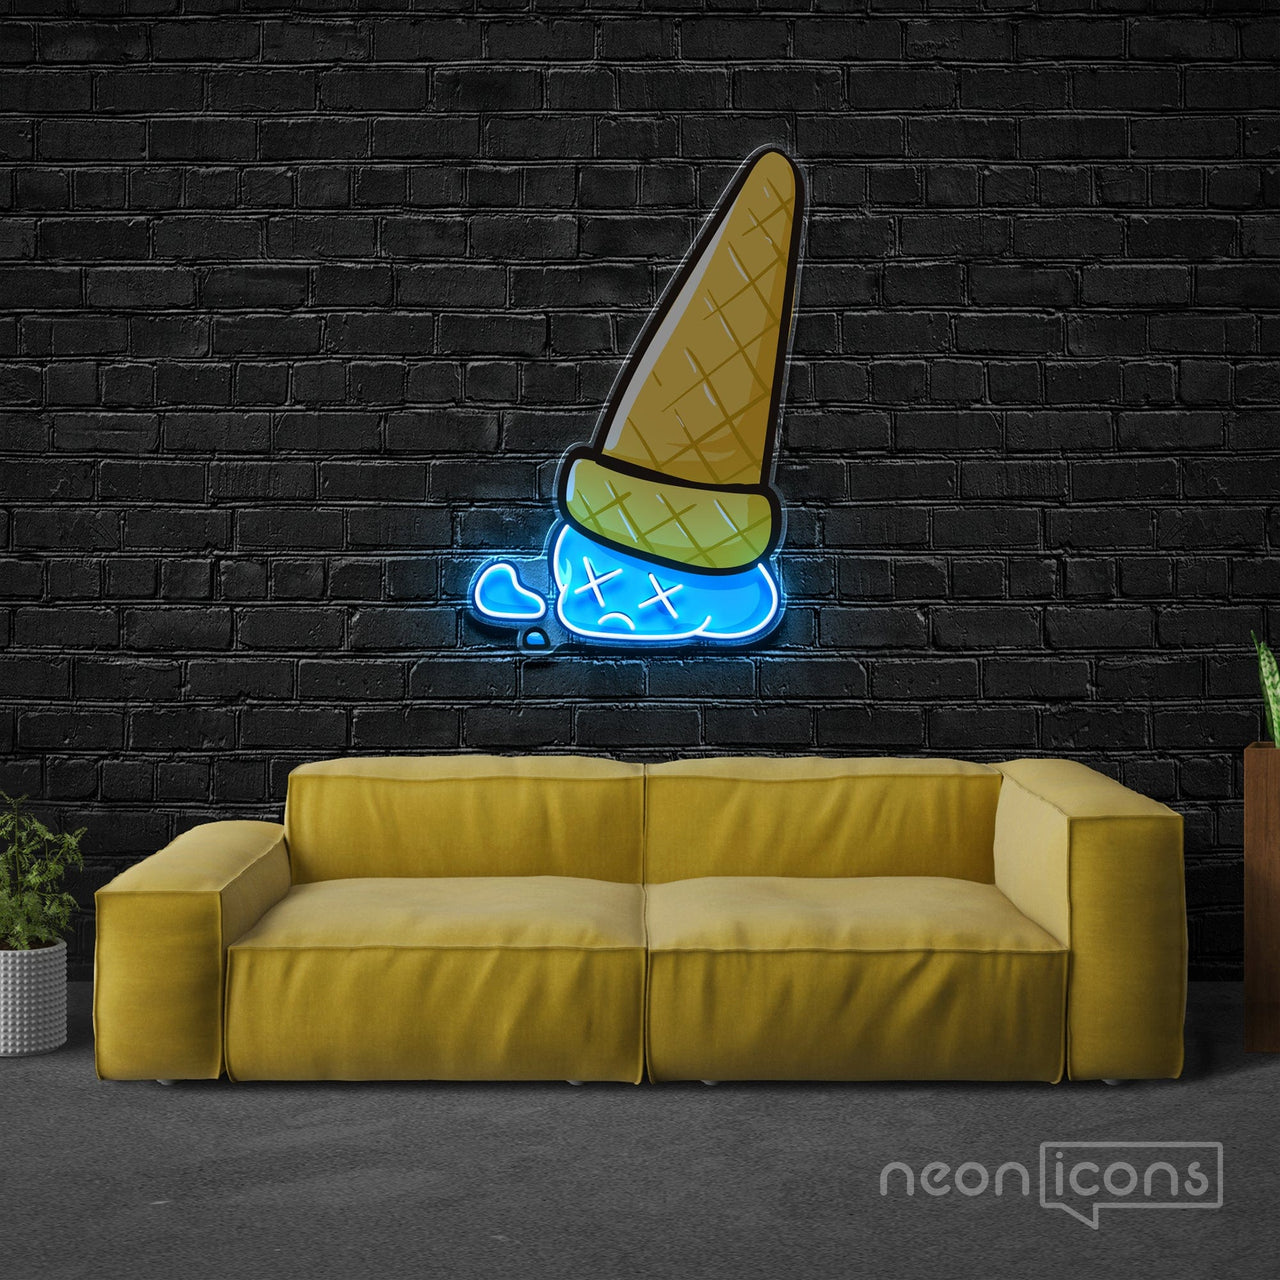 "Sadcream Cone V1" Neon x Acrylic Artwork by Neon Icons